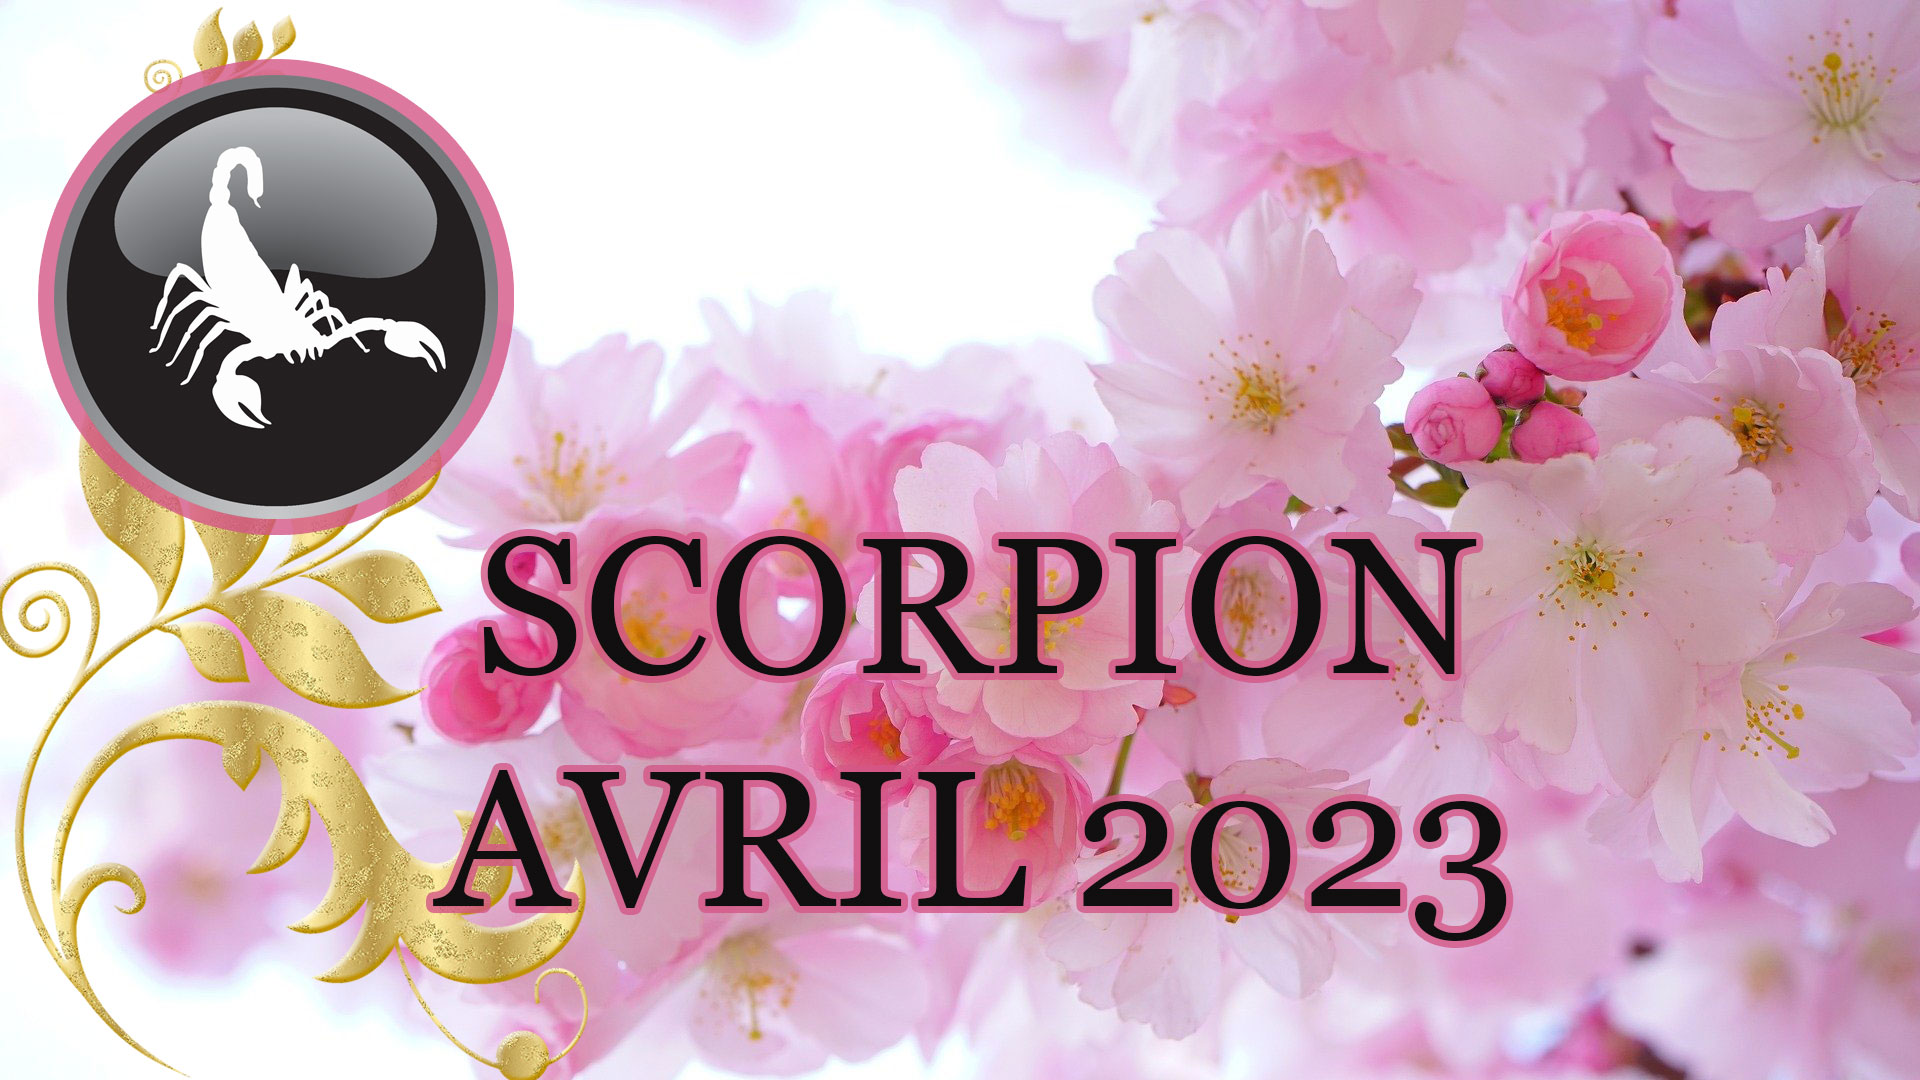 scorpion avril 2023